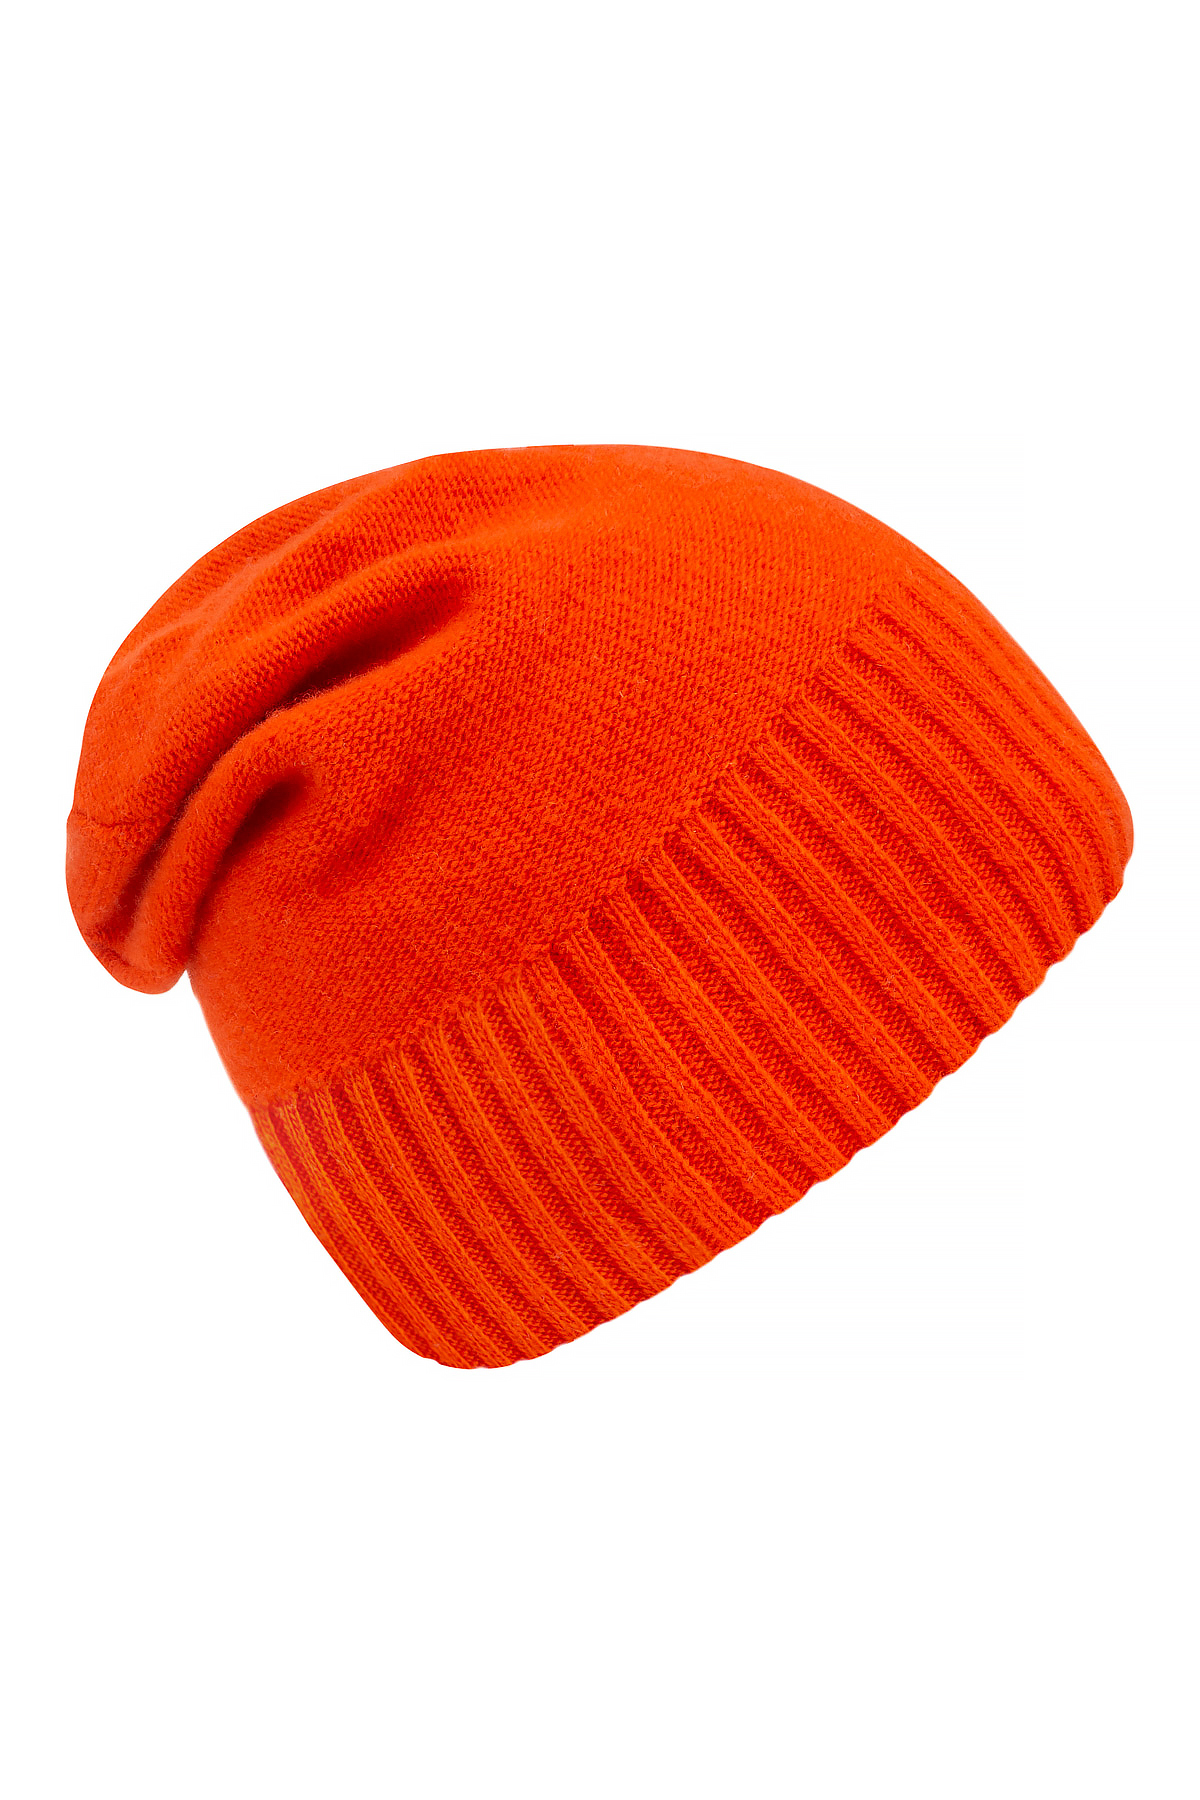 Image of an orange hat